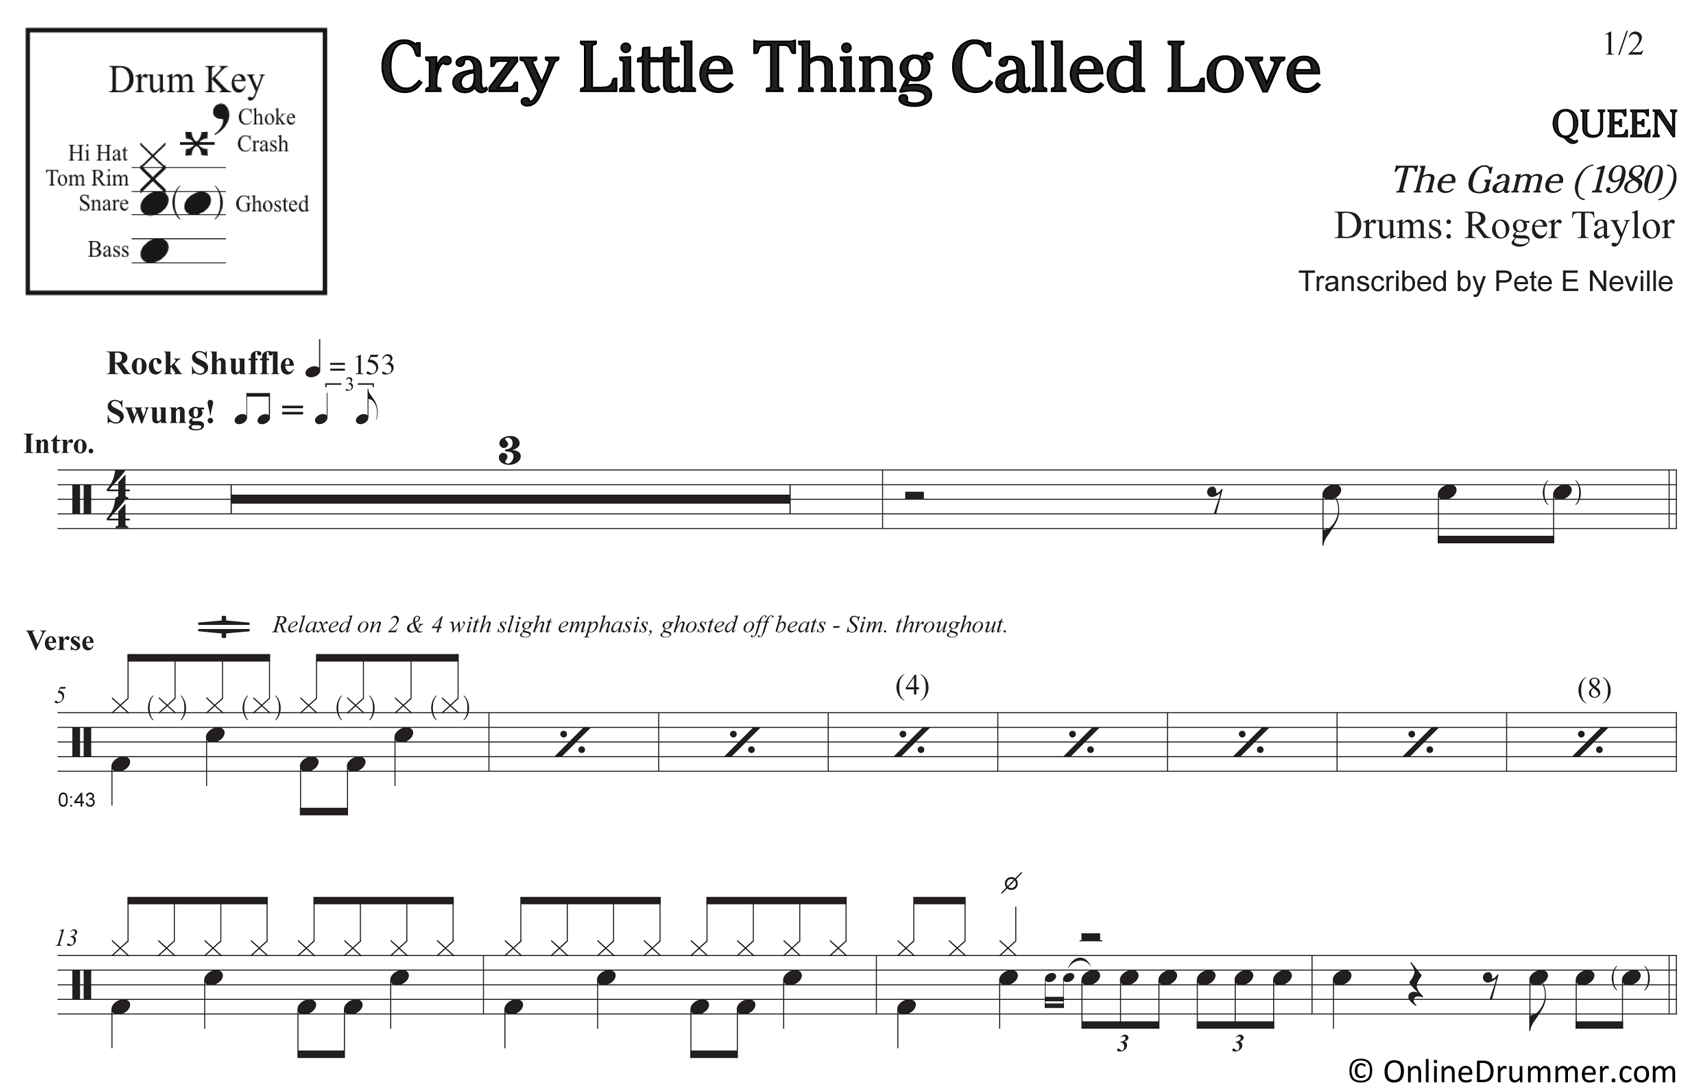 Crazy Little Thing Called Love - Queen -Drum Sheet Music